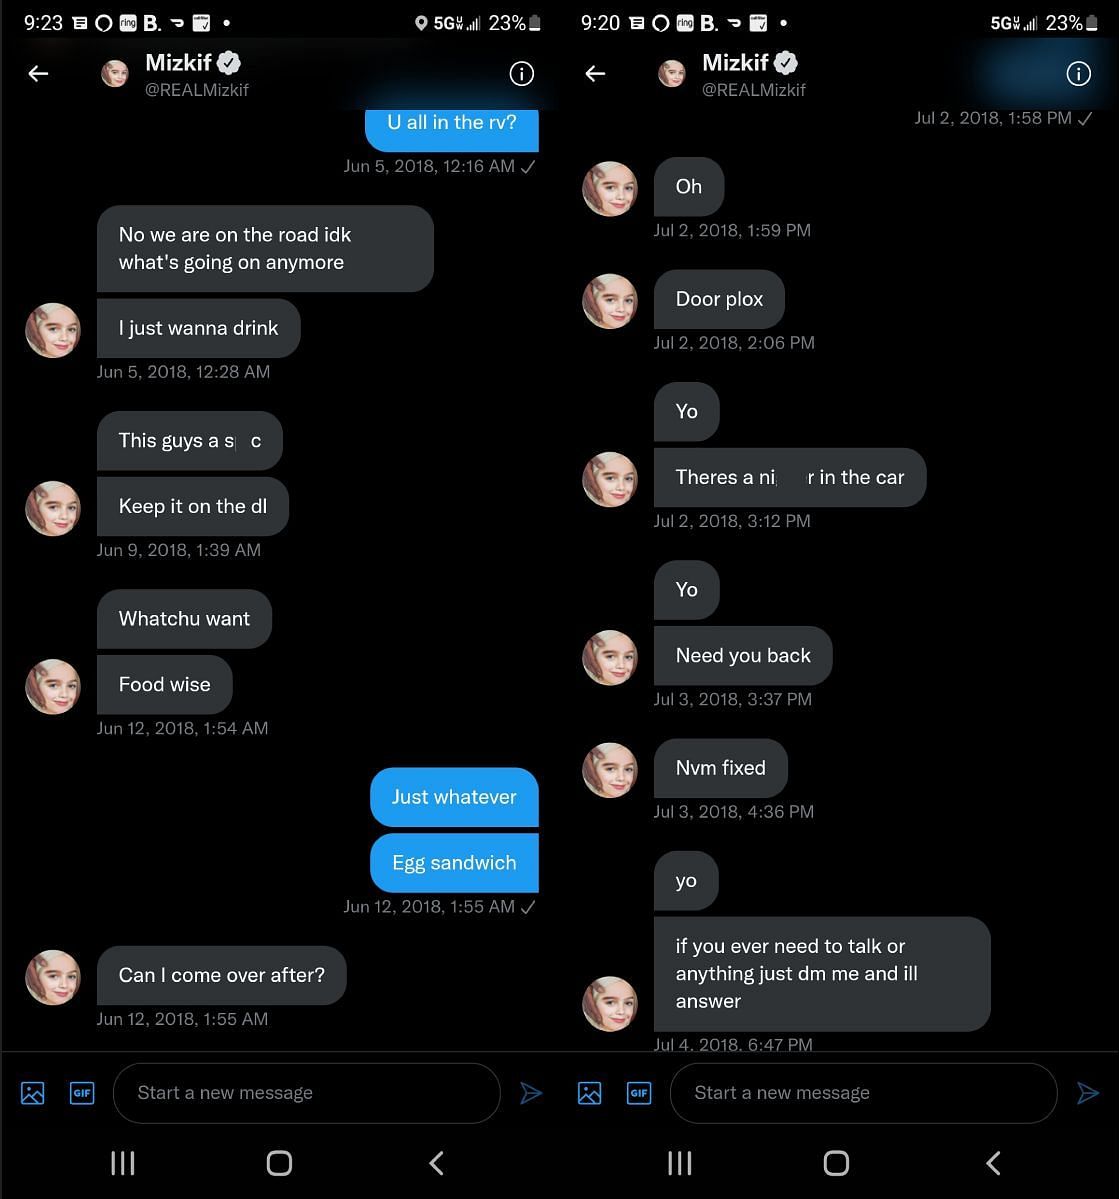 Ice Poseidon leaks old DM conversation featuring Mizkif 1/2 (Images via Twitter)